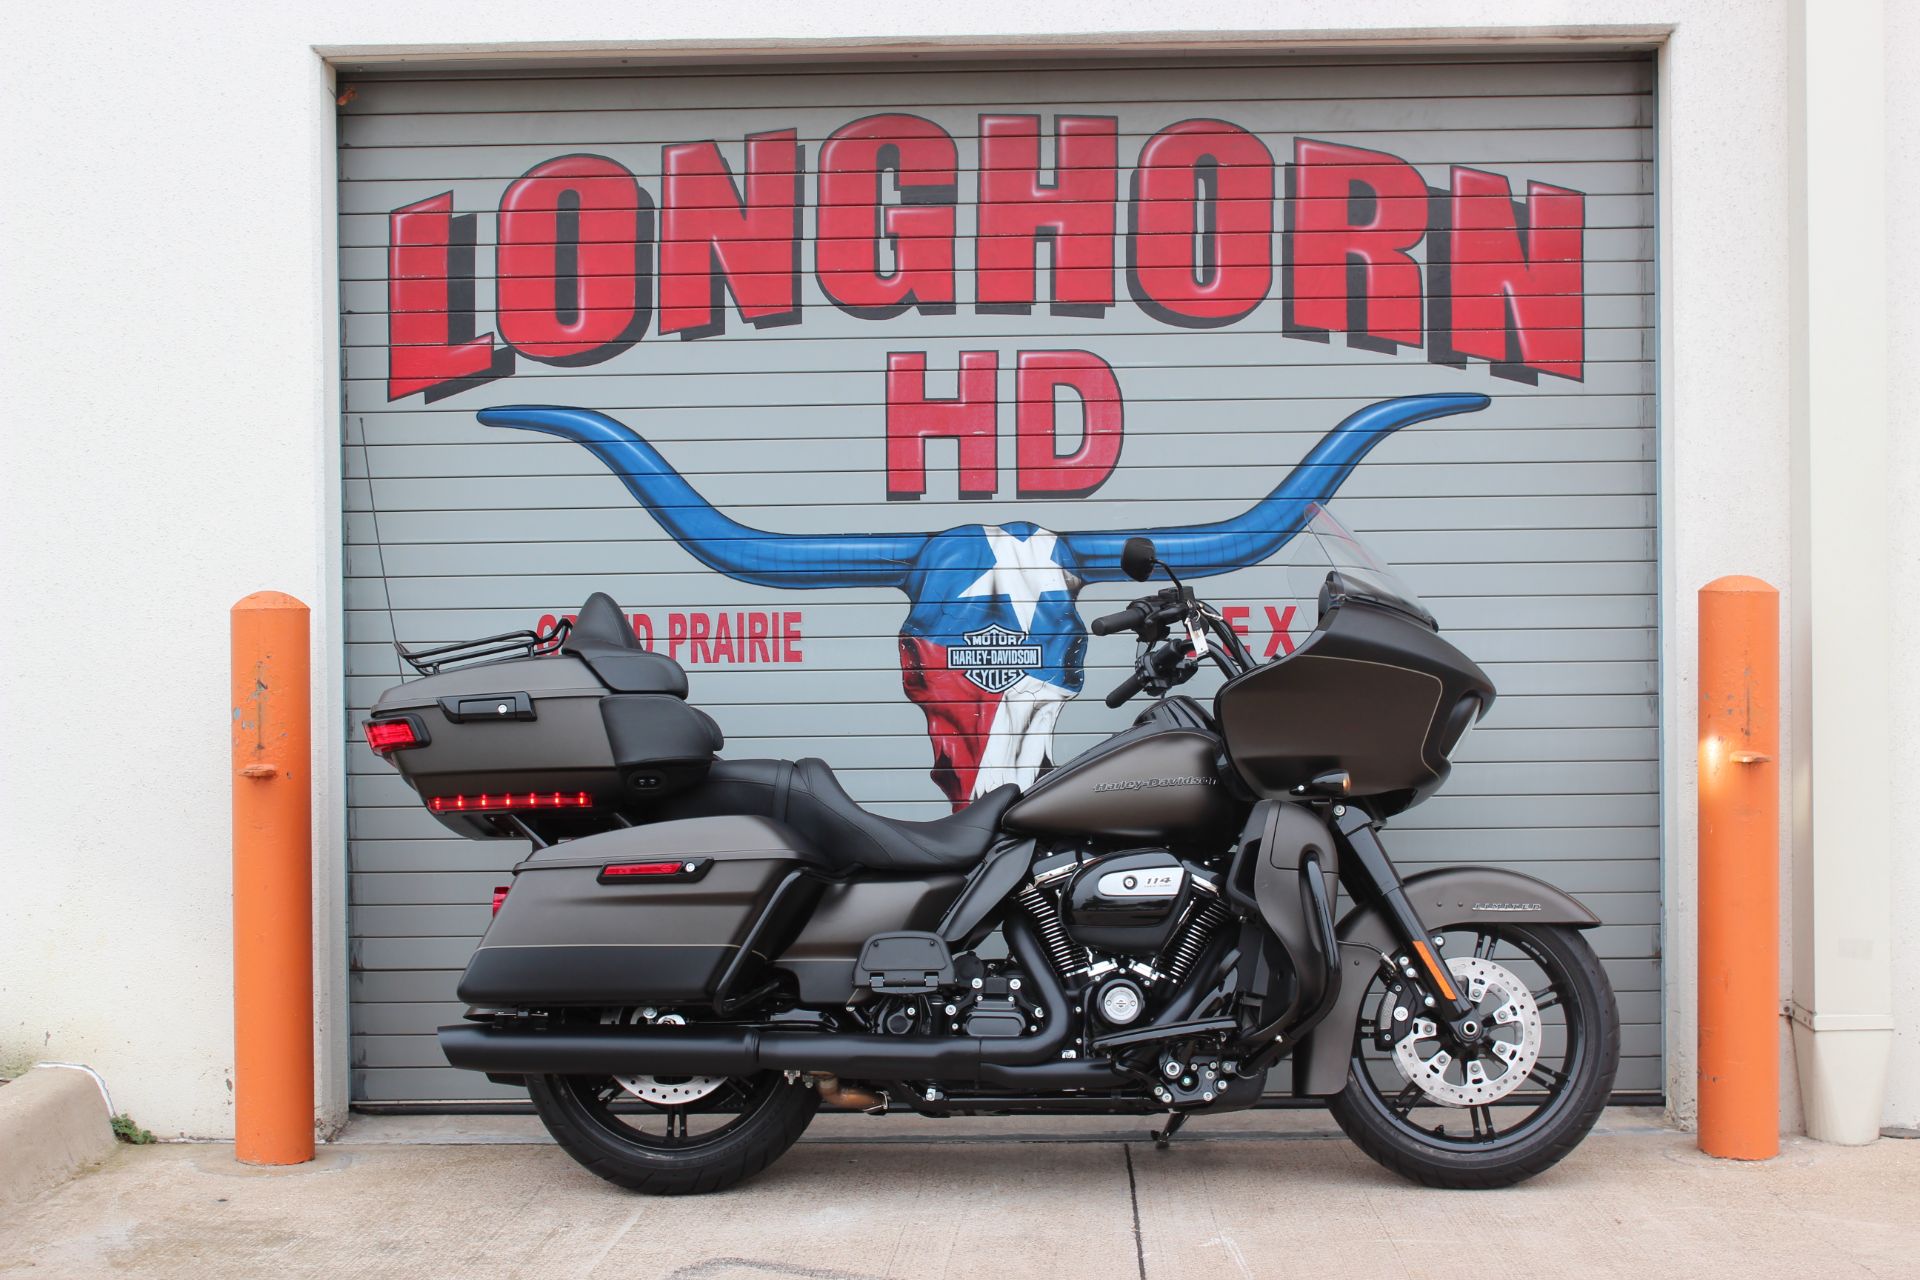 2021 Harley-Davidson Road Glide® Limited in Grand Prairie, Texas - Photo 1